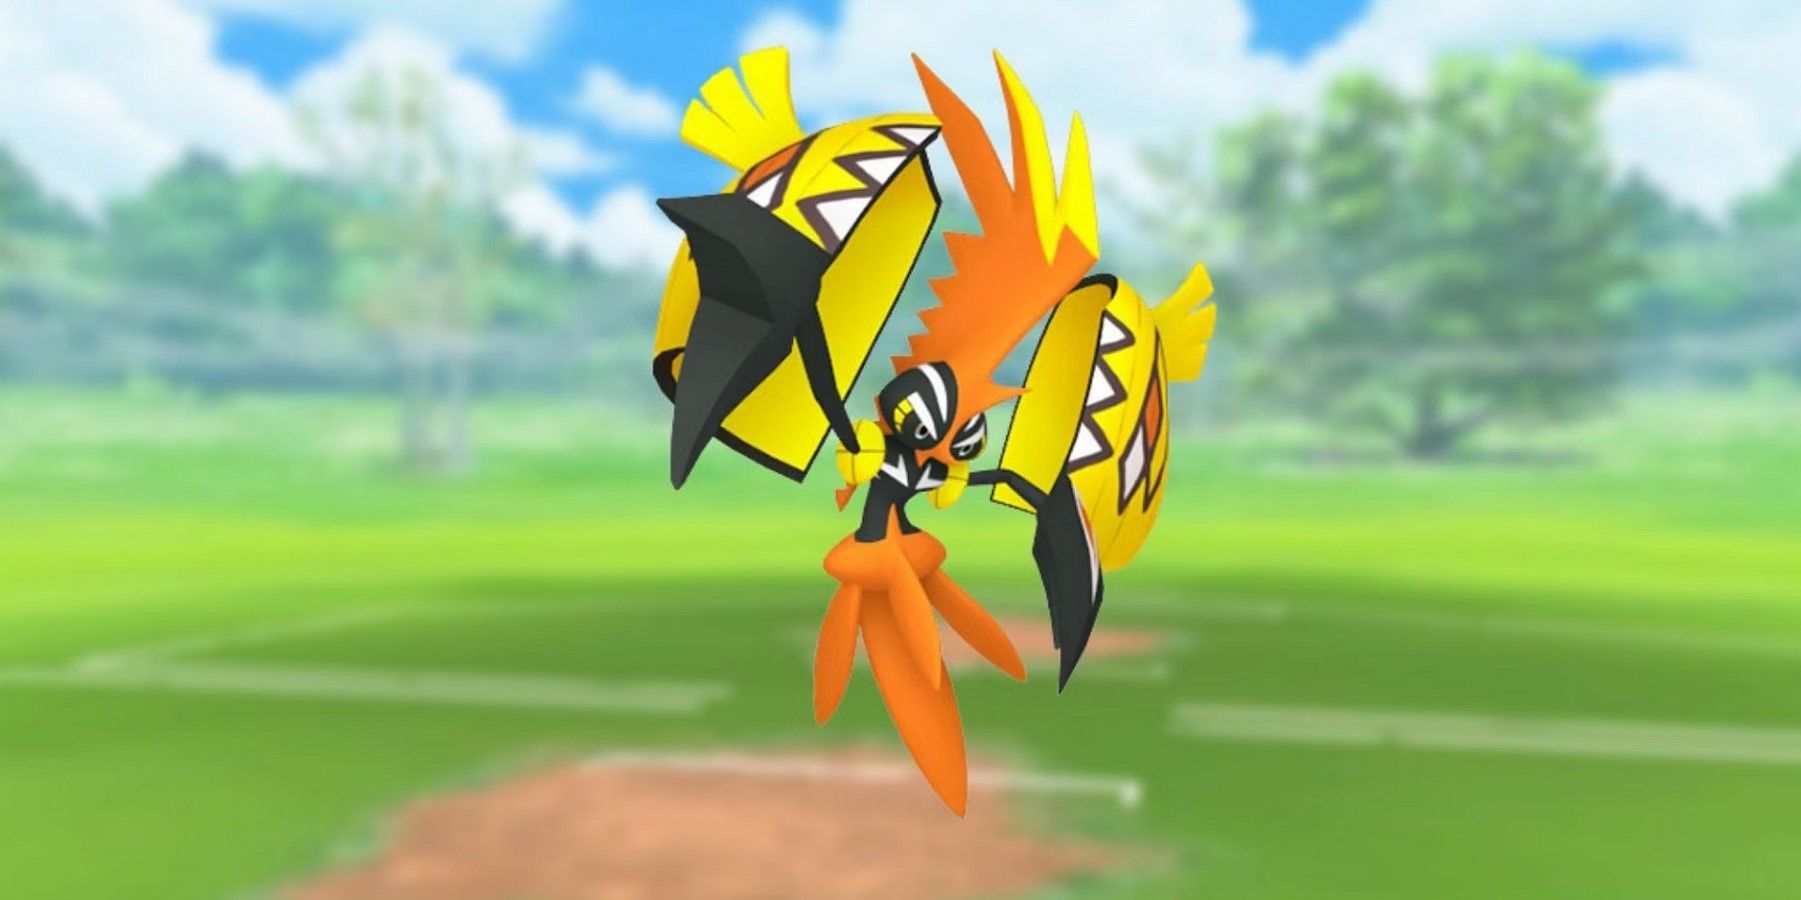 Pokémon GO's Tapu Koko on a blurred baseball field background